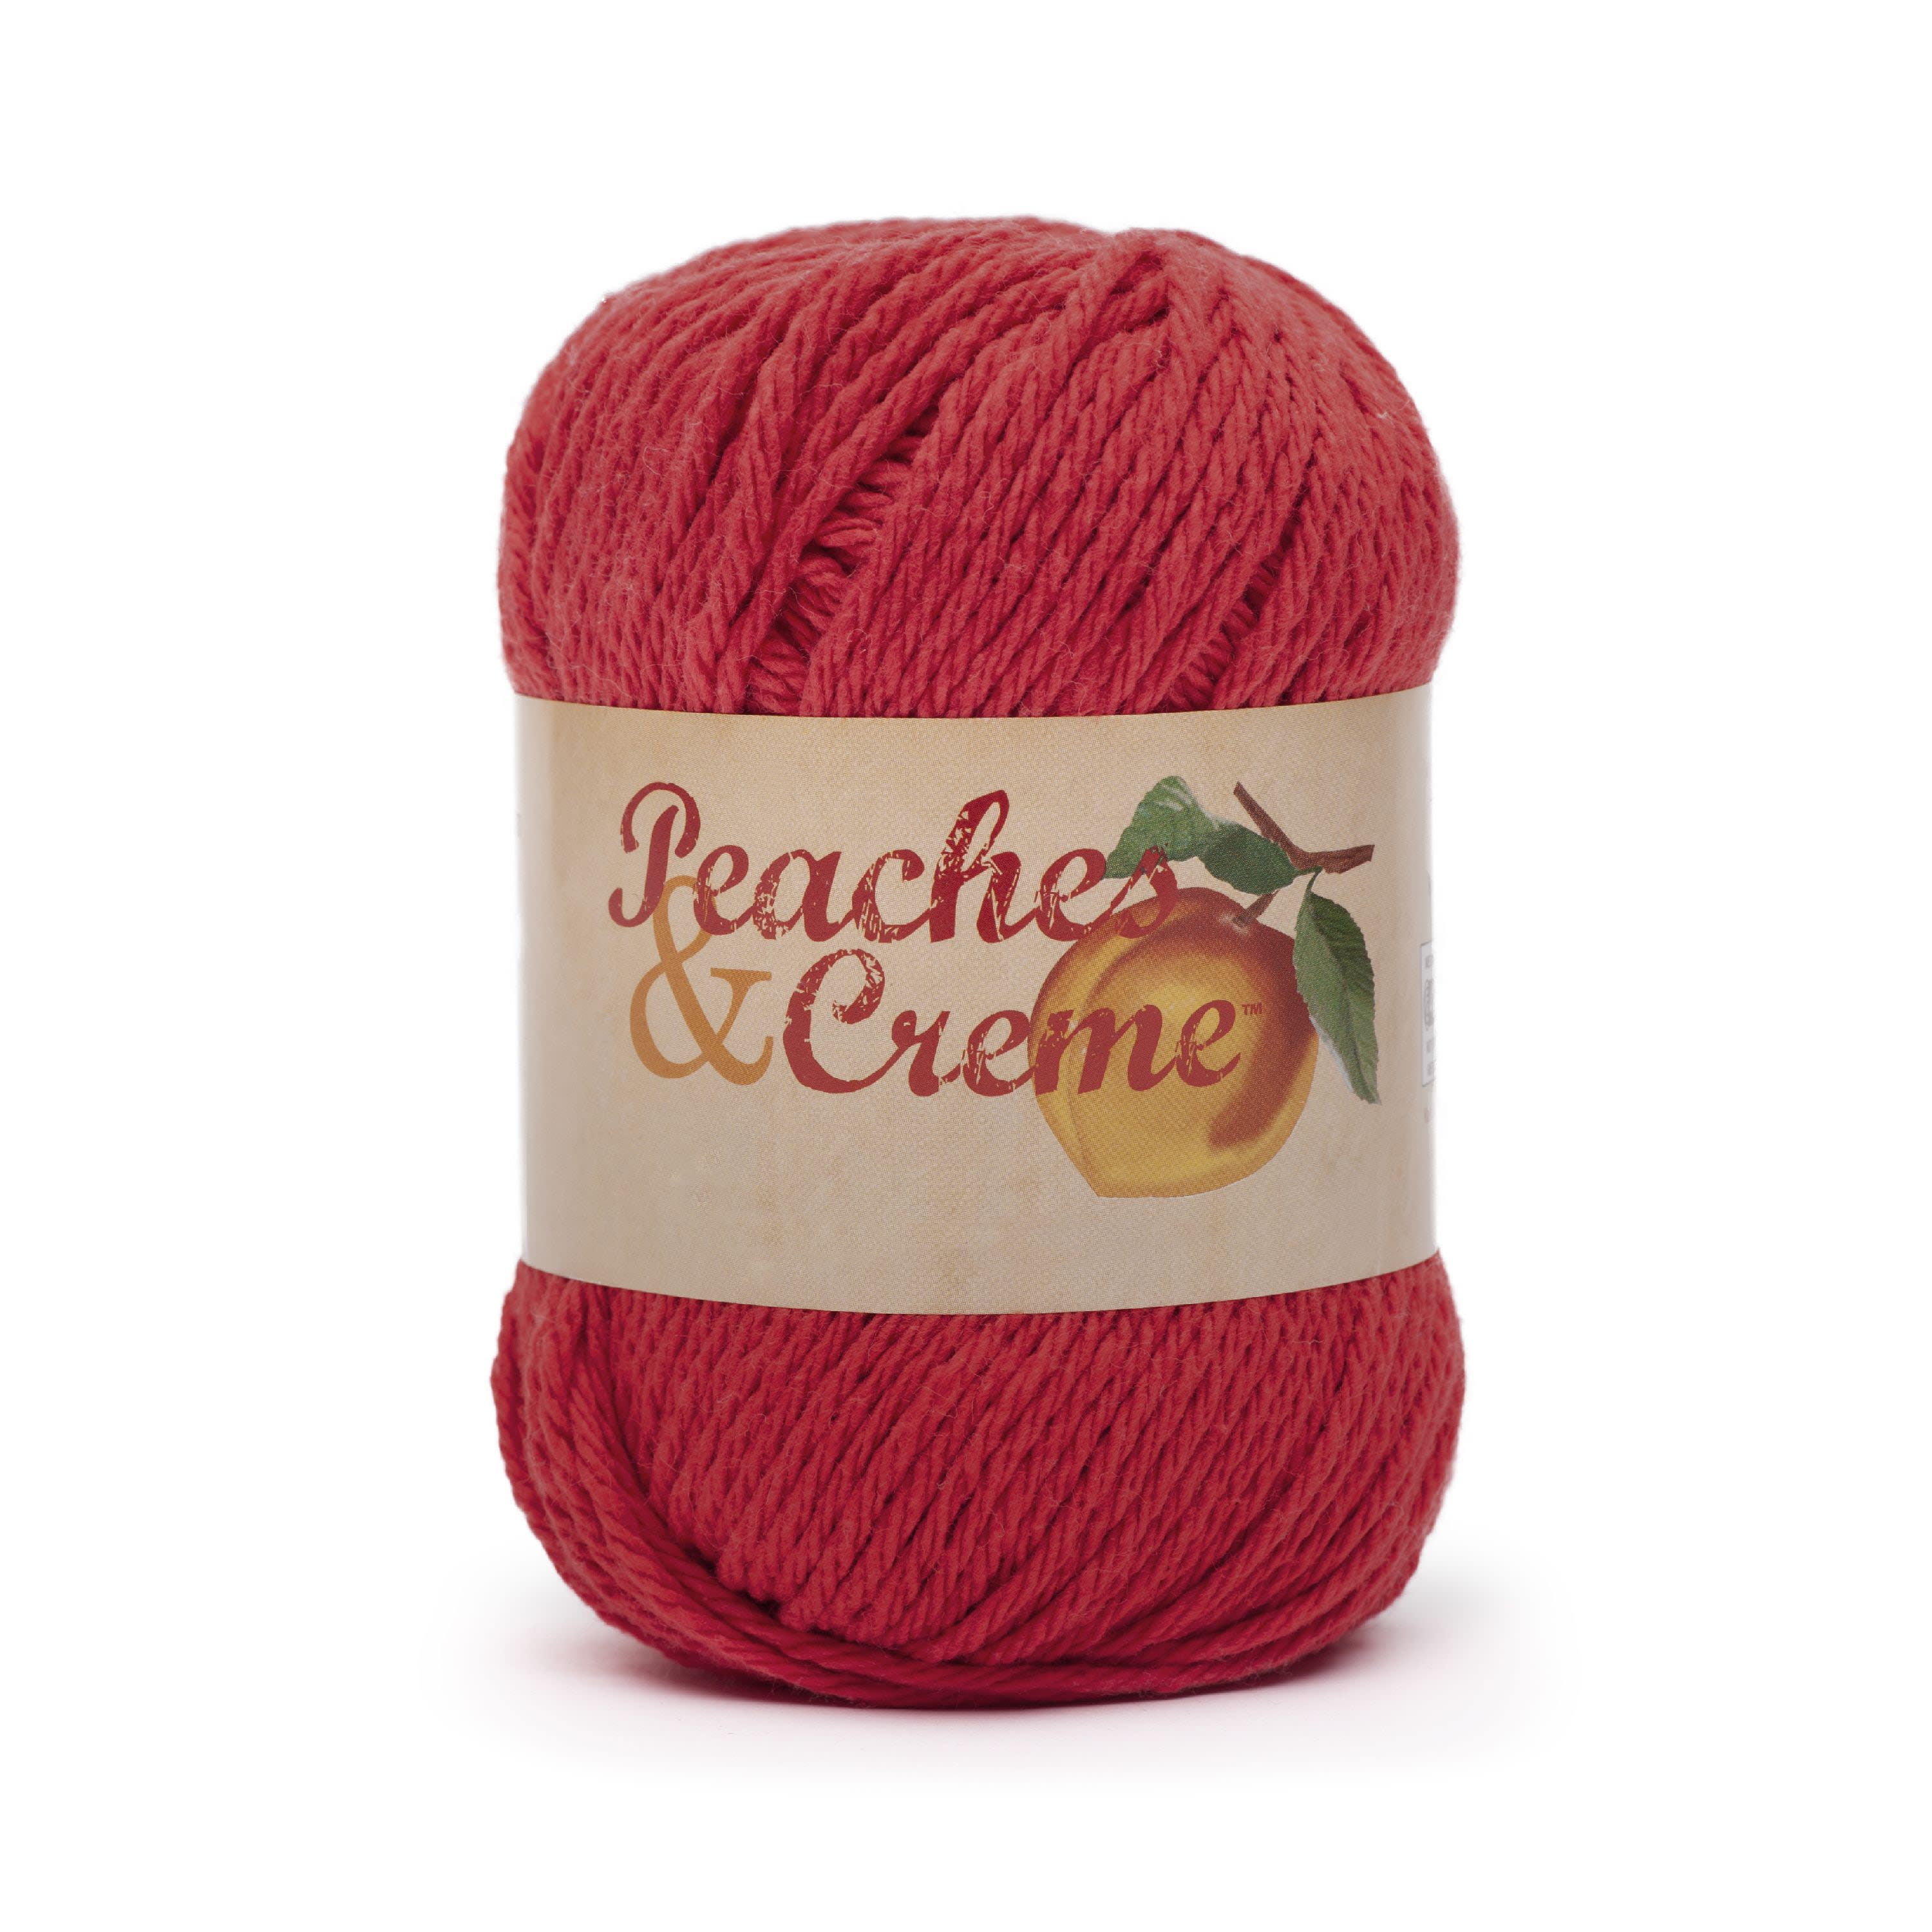 Peaches & Creme Bright Orange Yarn - 2.5 oz